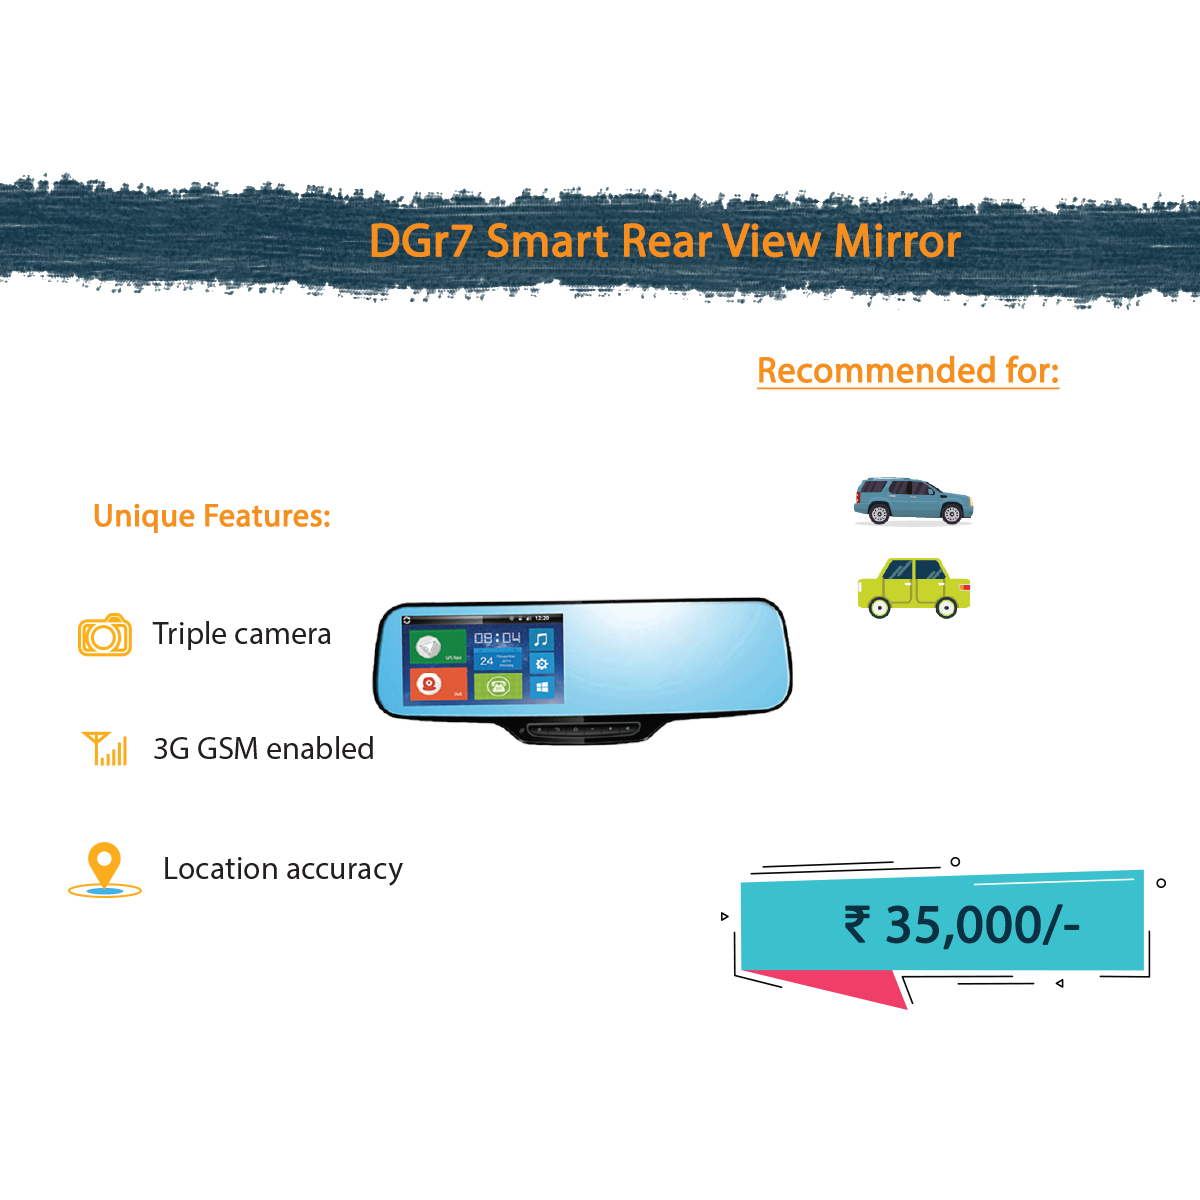 DGr7 - Smart Rear View Mirror